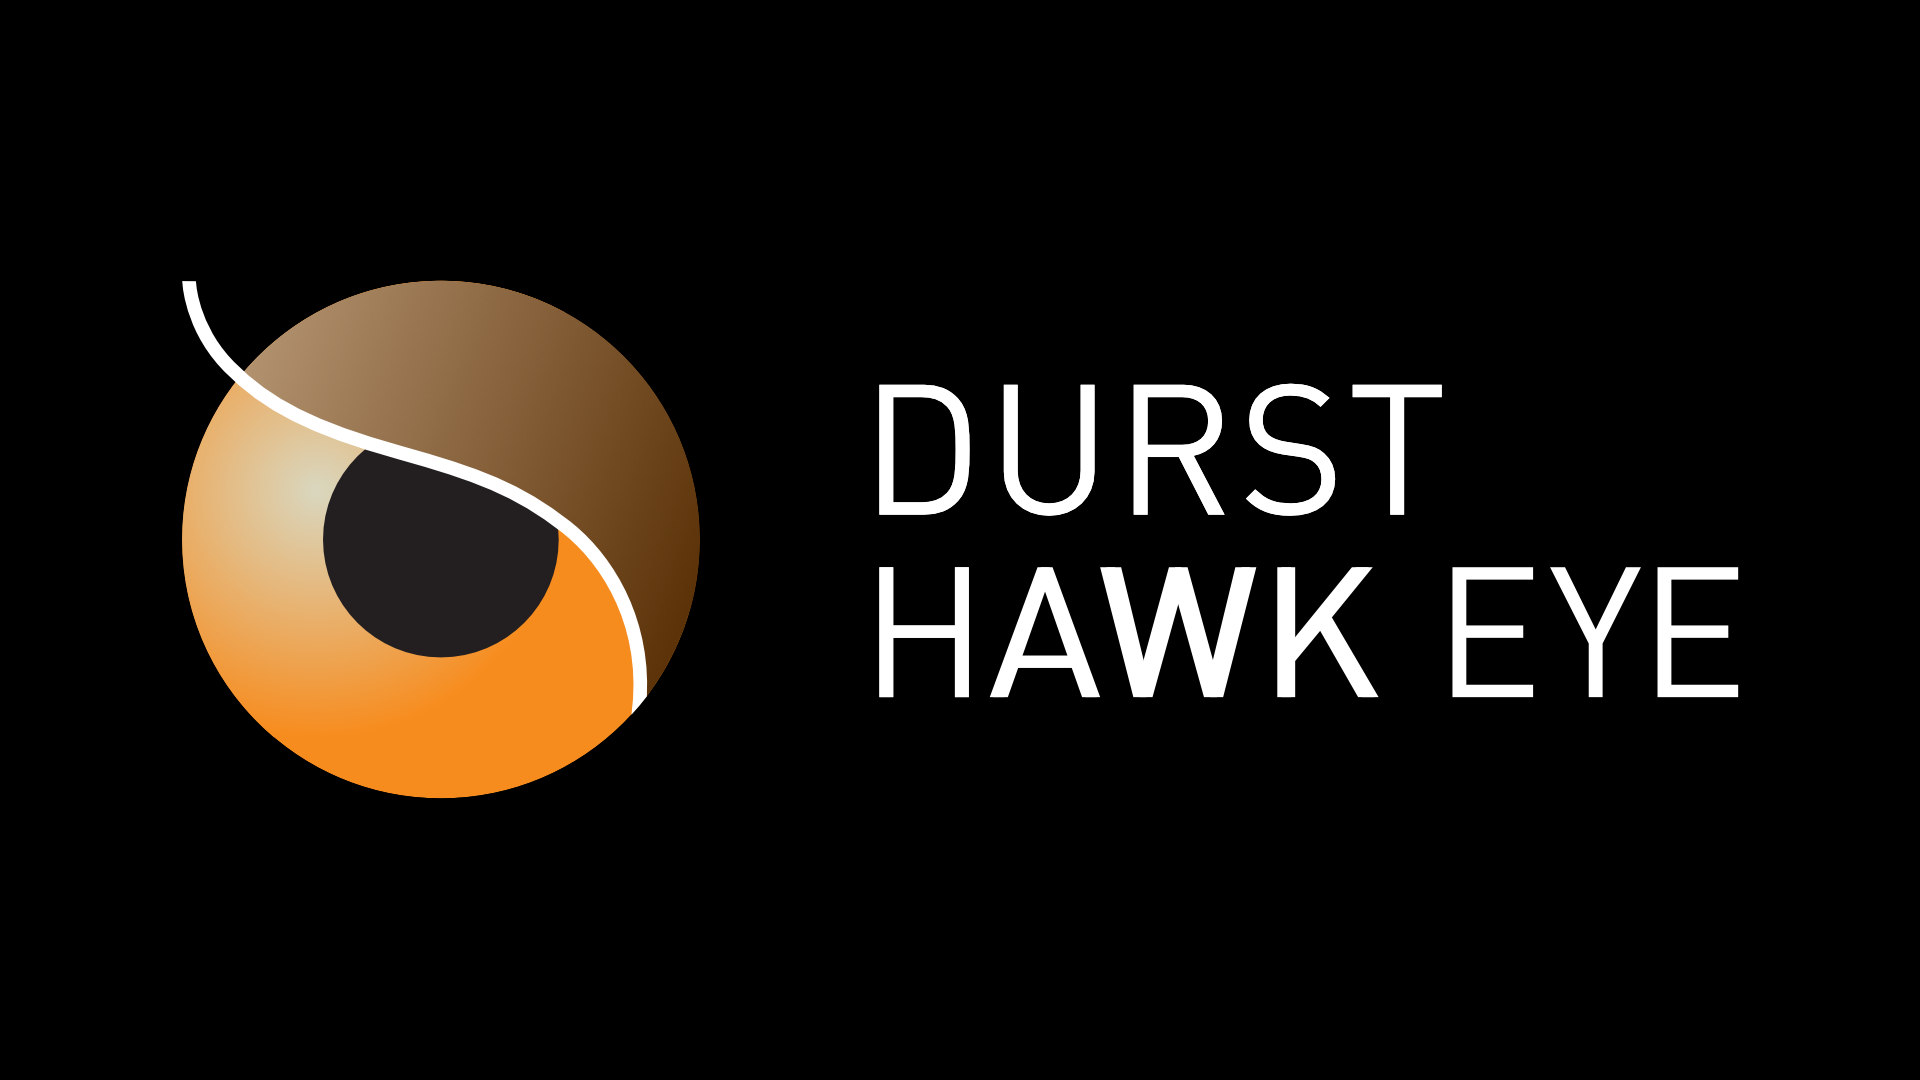 Durst introduces Hawk Eye technology